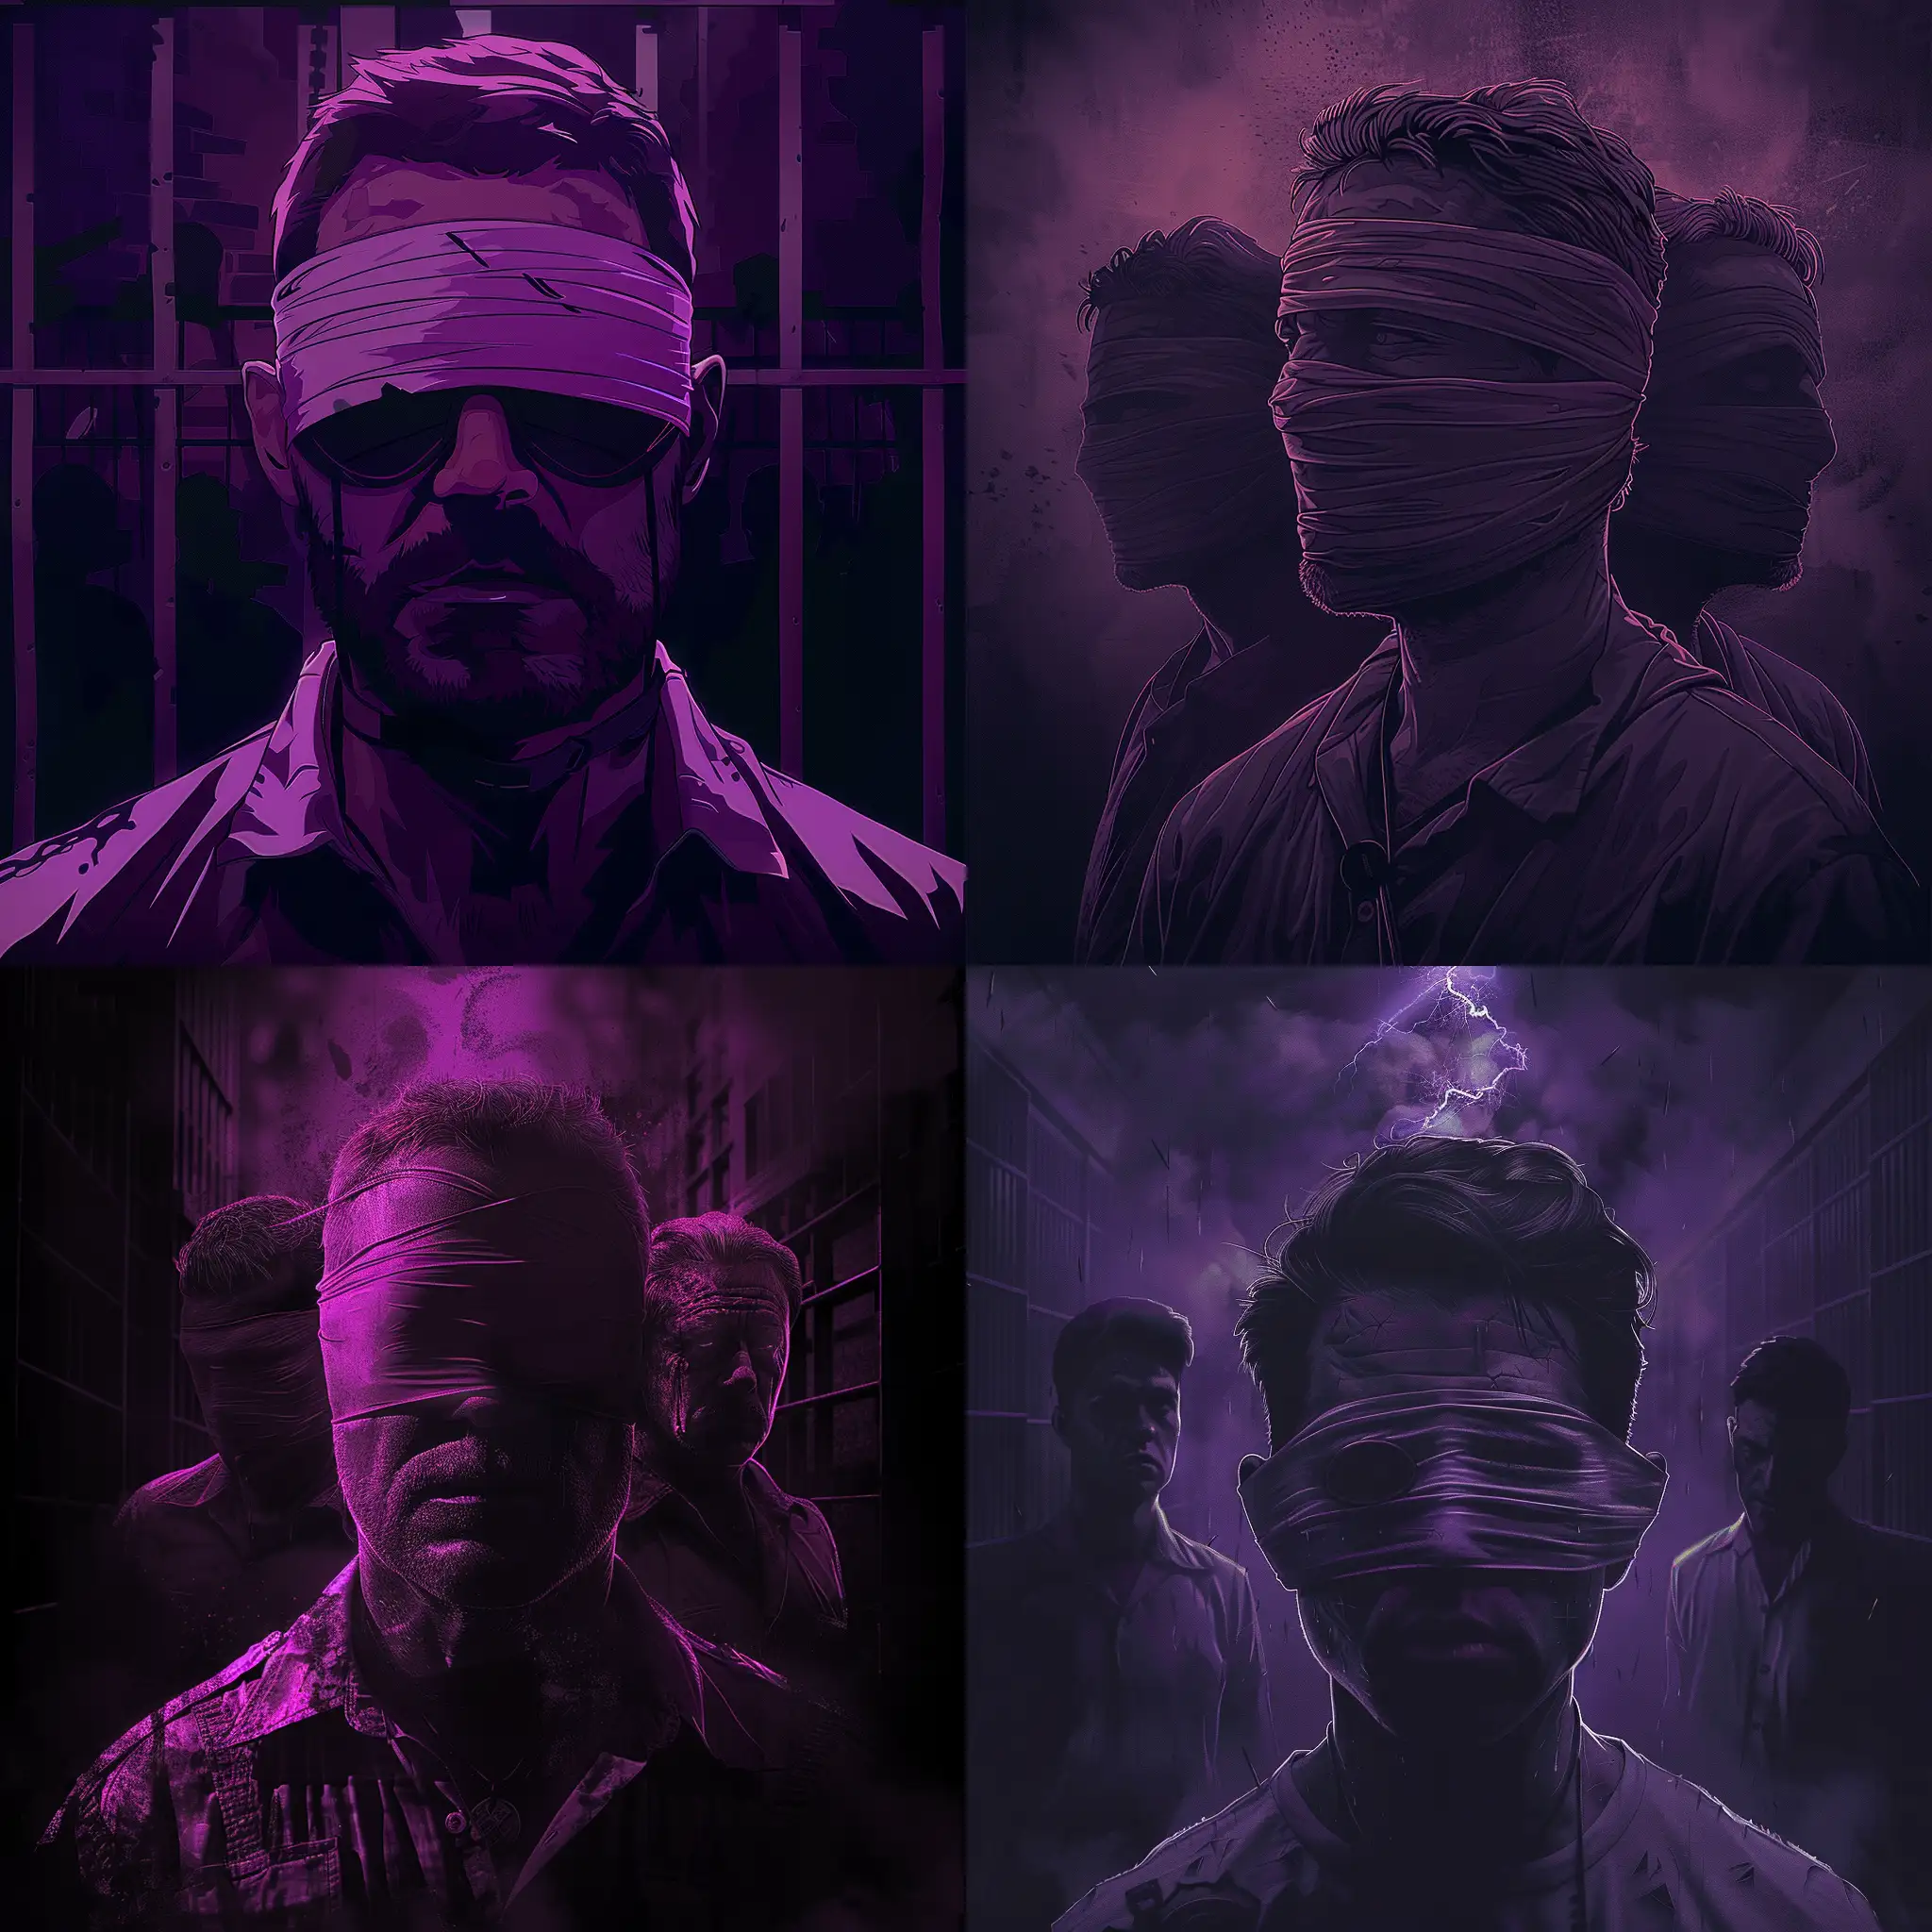 Blindfolded-Prisoner-with-Serious-Expression-in-Dark-Atmosphere-Digital-Art-Poster